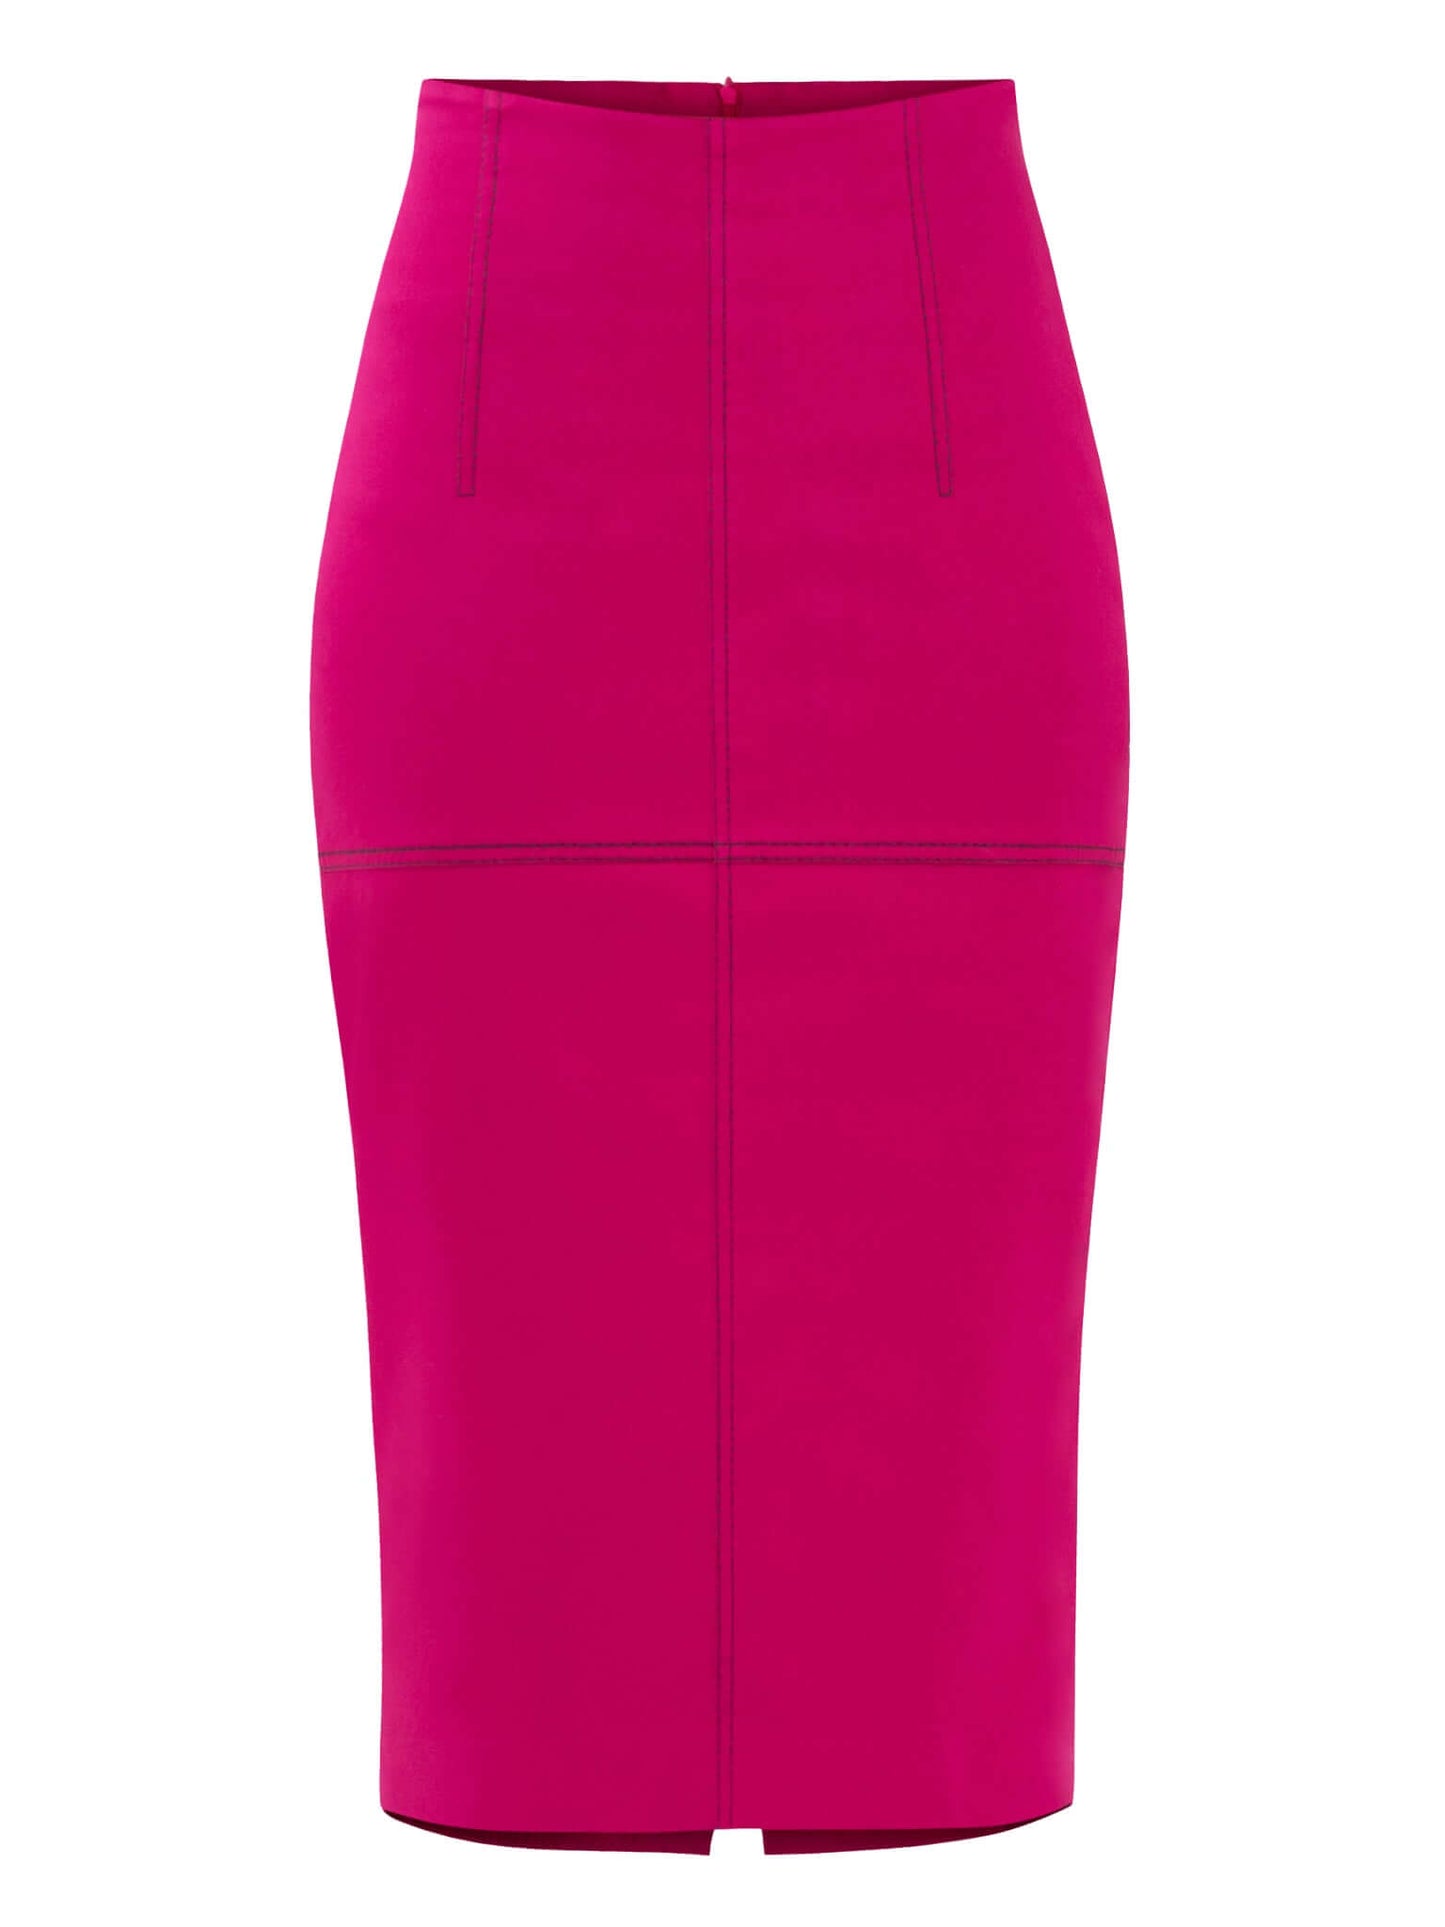 Details Matter High-Waist Pencil Midi Skirt - Pink by Tia Dorraine Women's Luxury Fashion Designer Clothing Brand